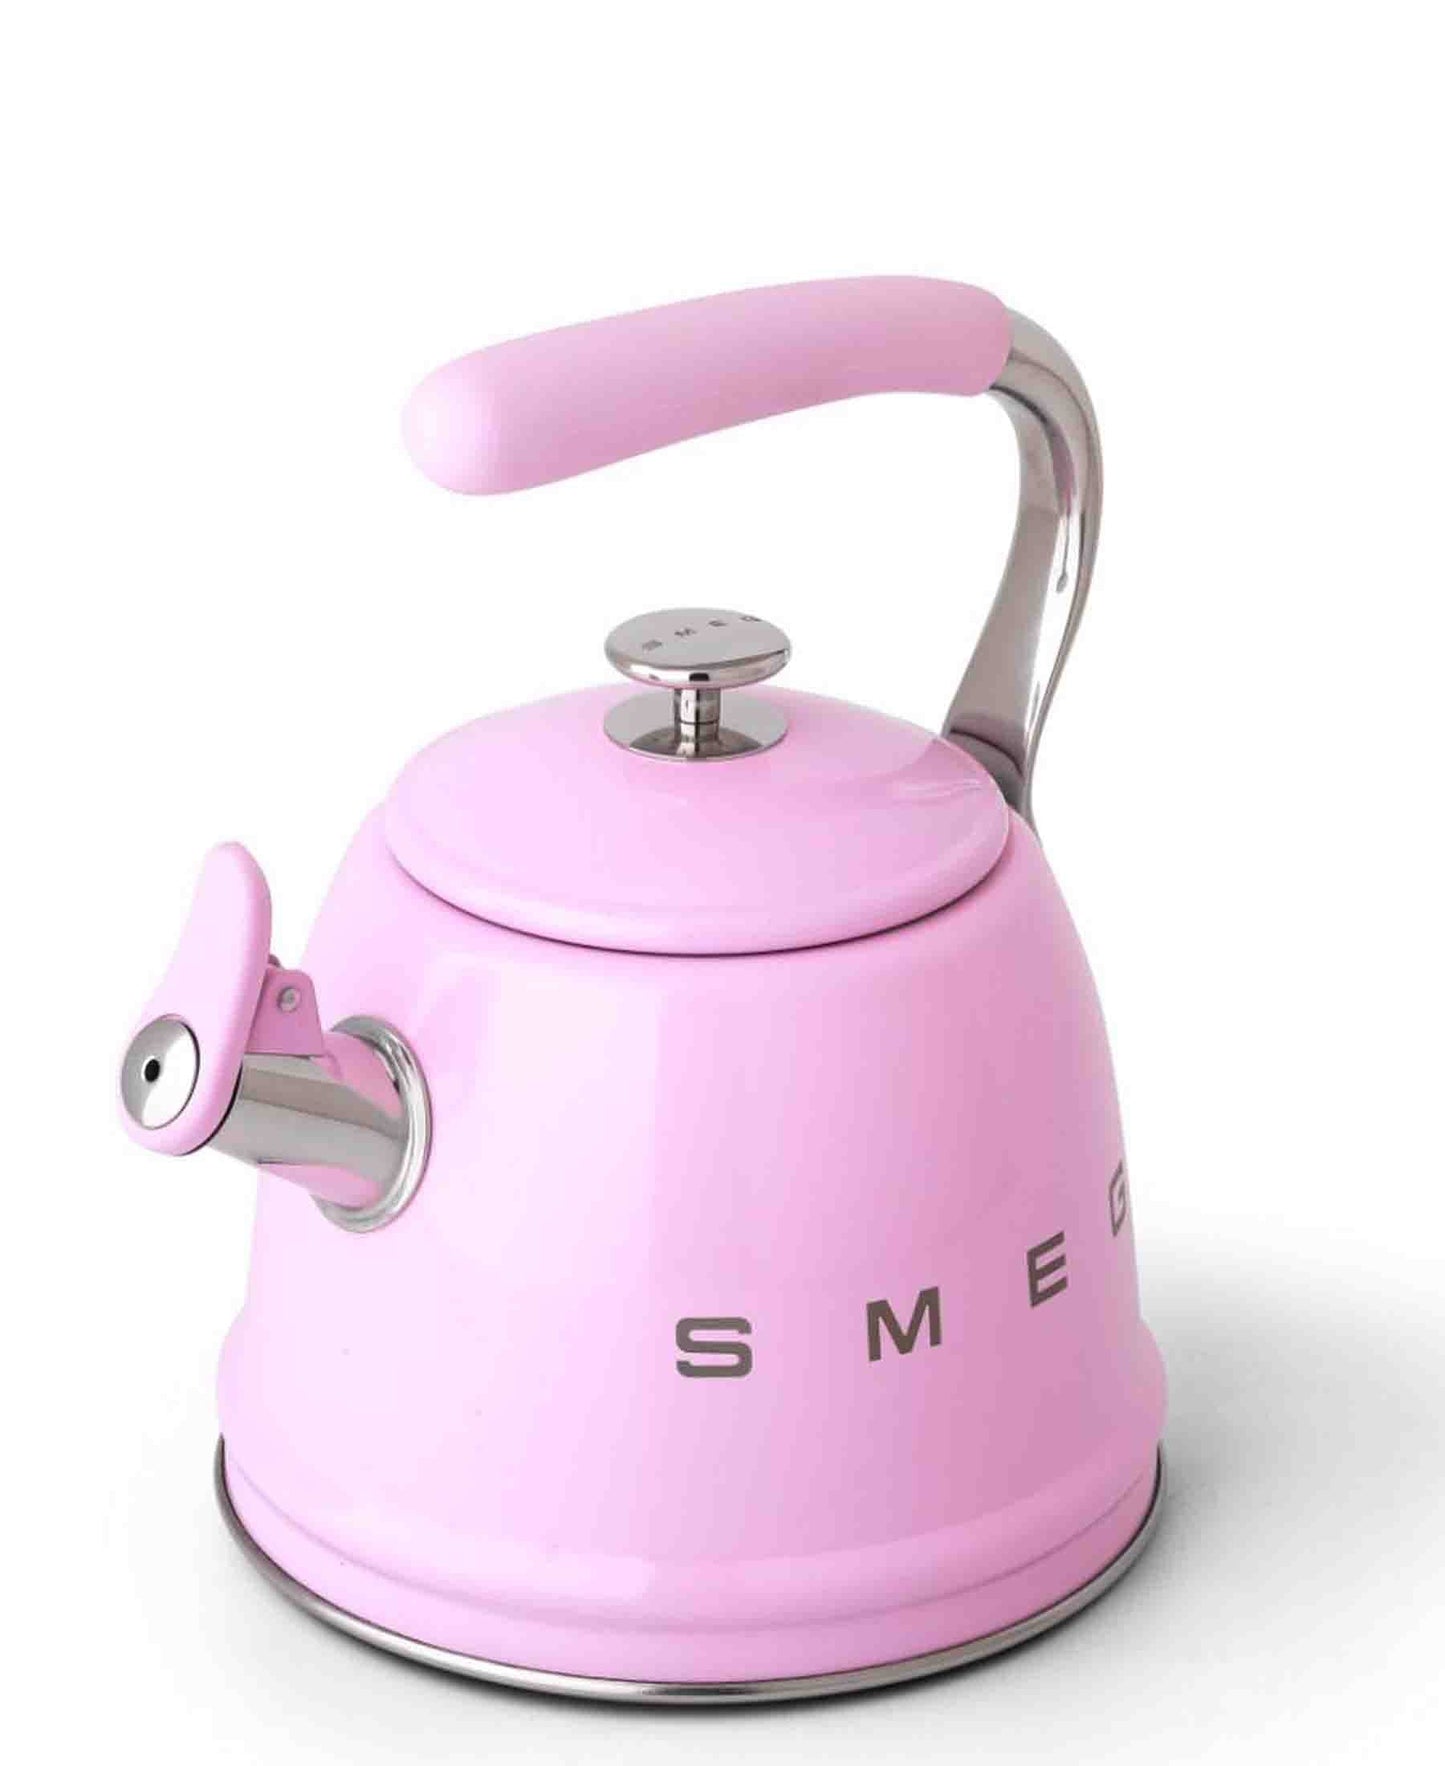 Smeg Whistling Stovetop Kettle - Pink